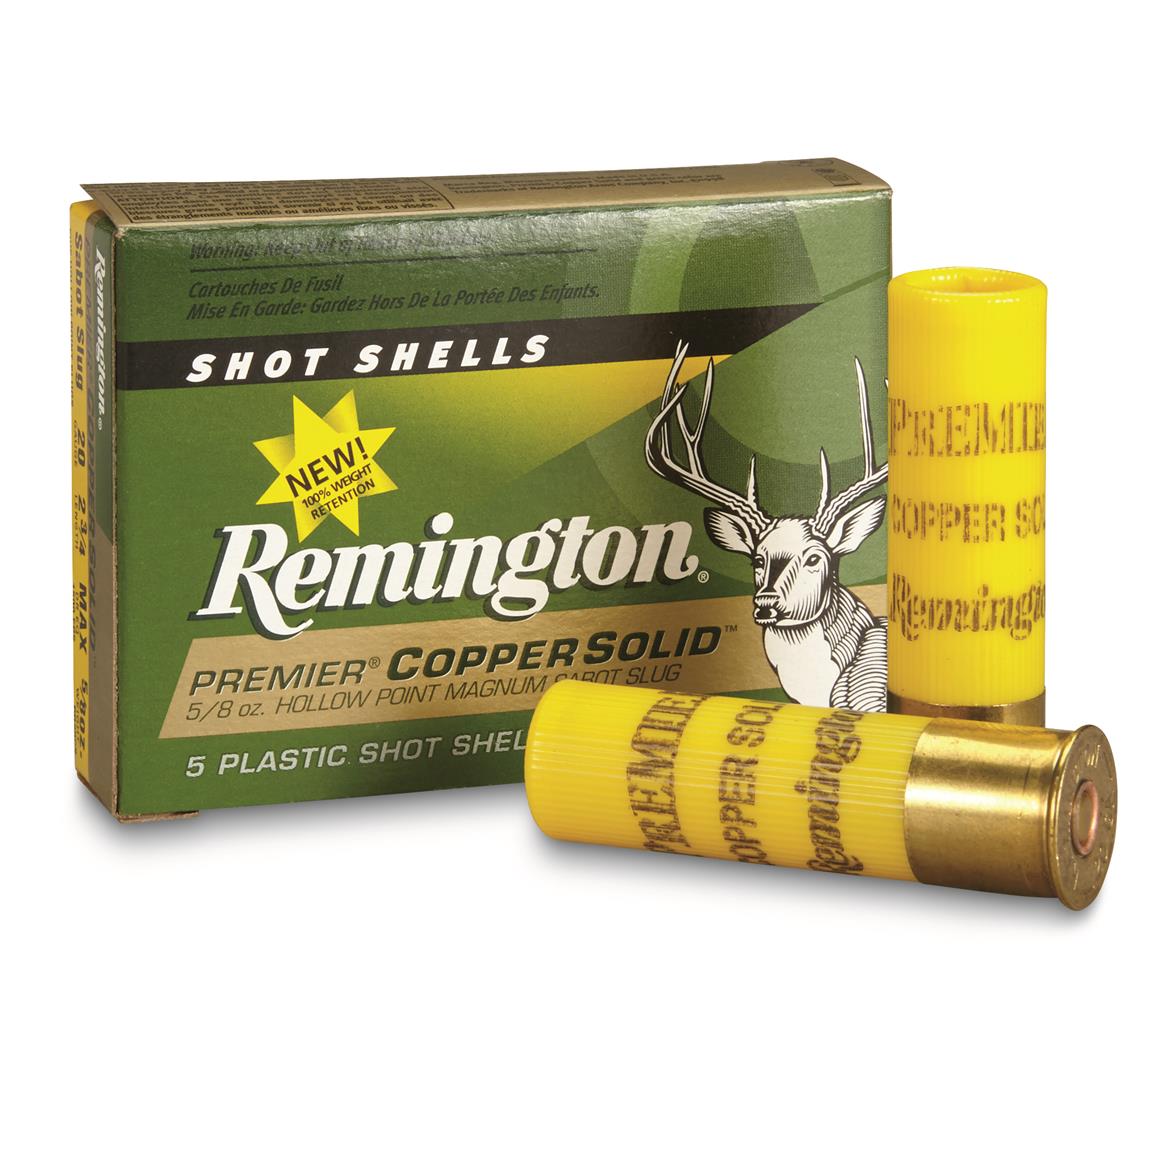 Remington Copper Solid Sabot Slugs Rebate